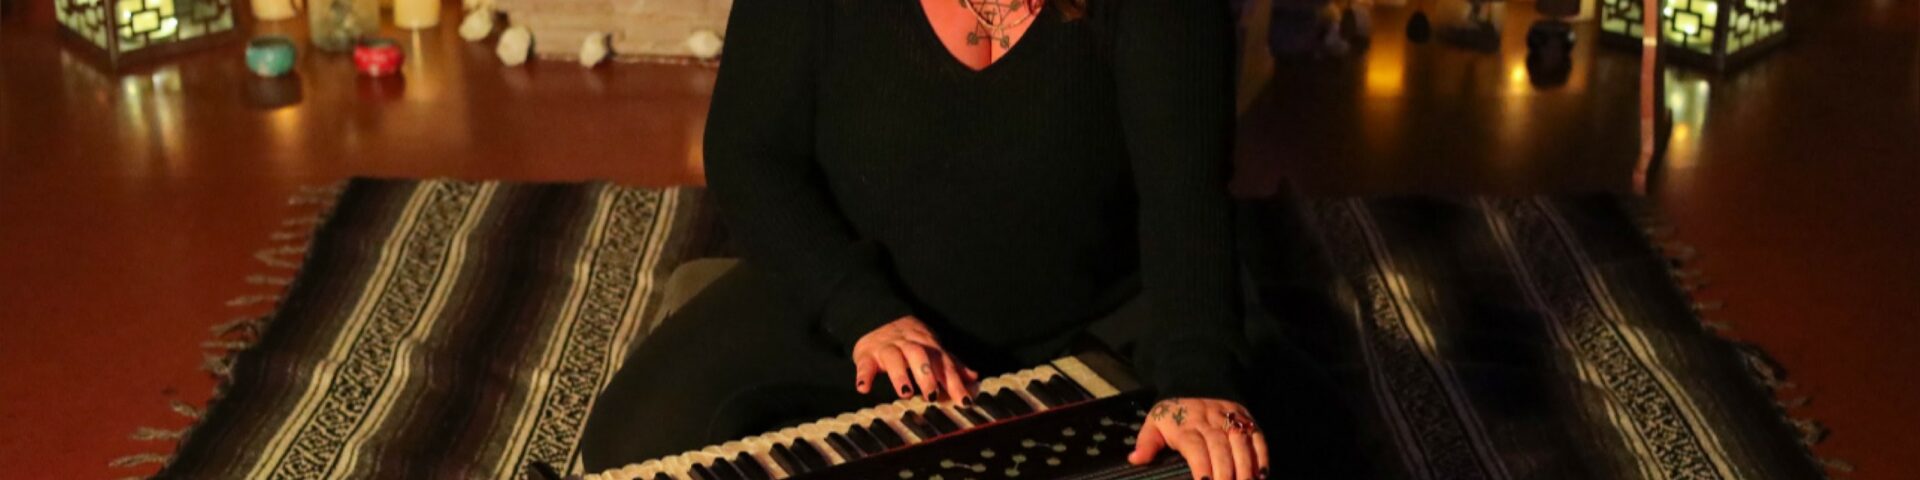 A woman plays an instrument